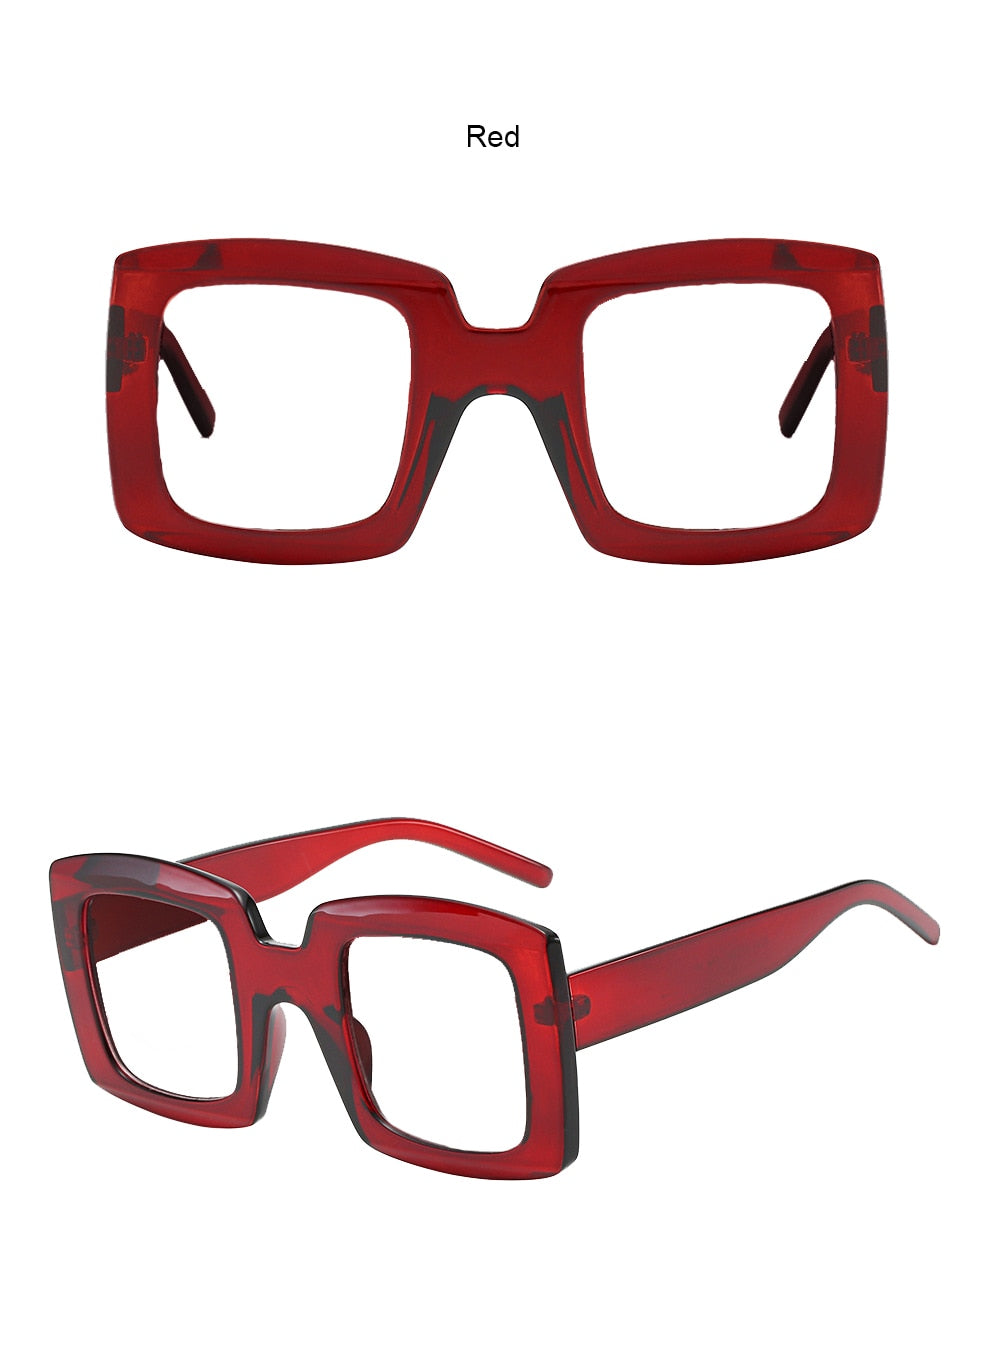 TEEK - Wide Square Reading Glasses | Prescribed or Zero Strength EYEGLASSES theteekdotcom red clear 0 